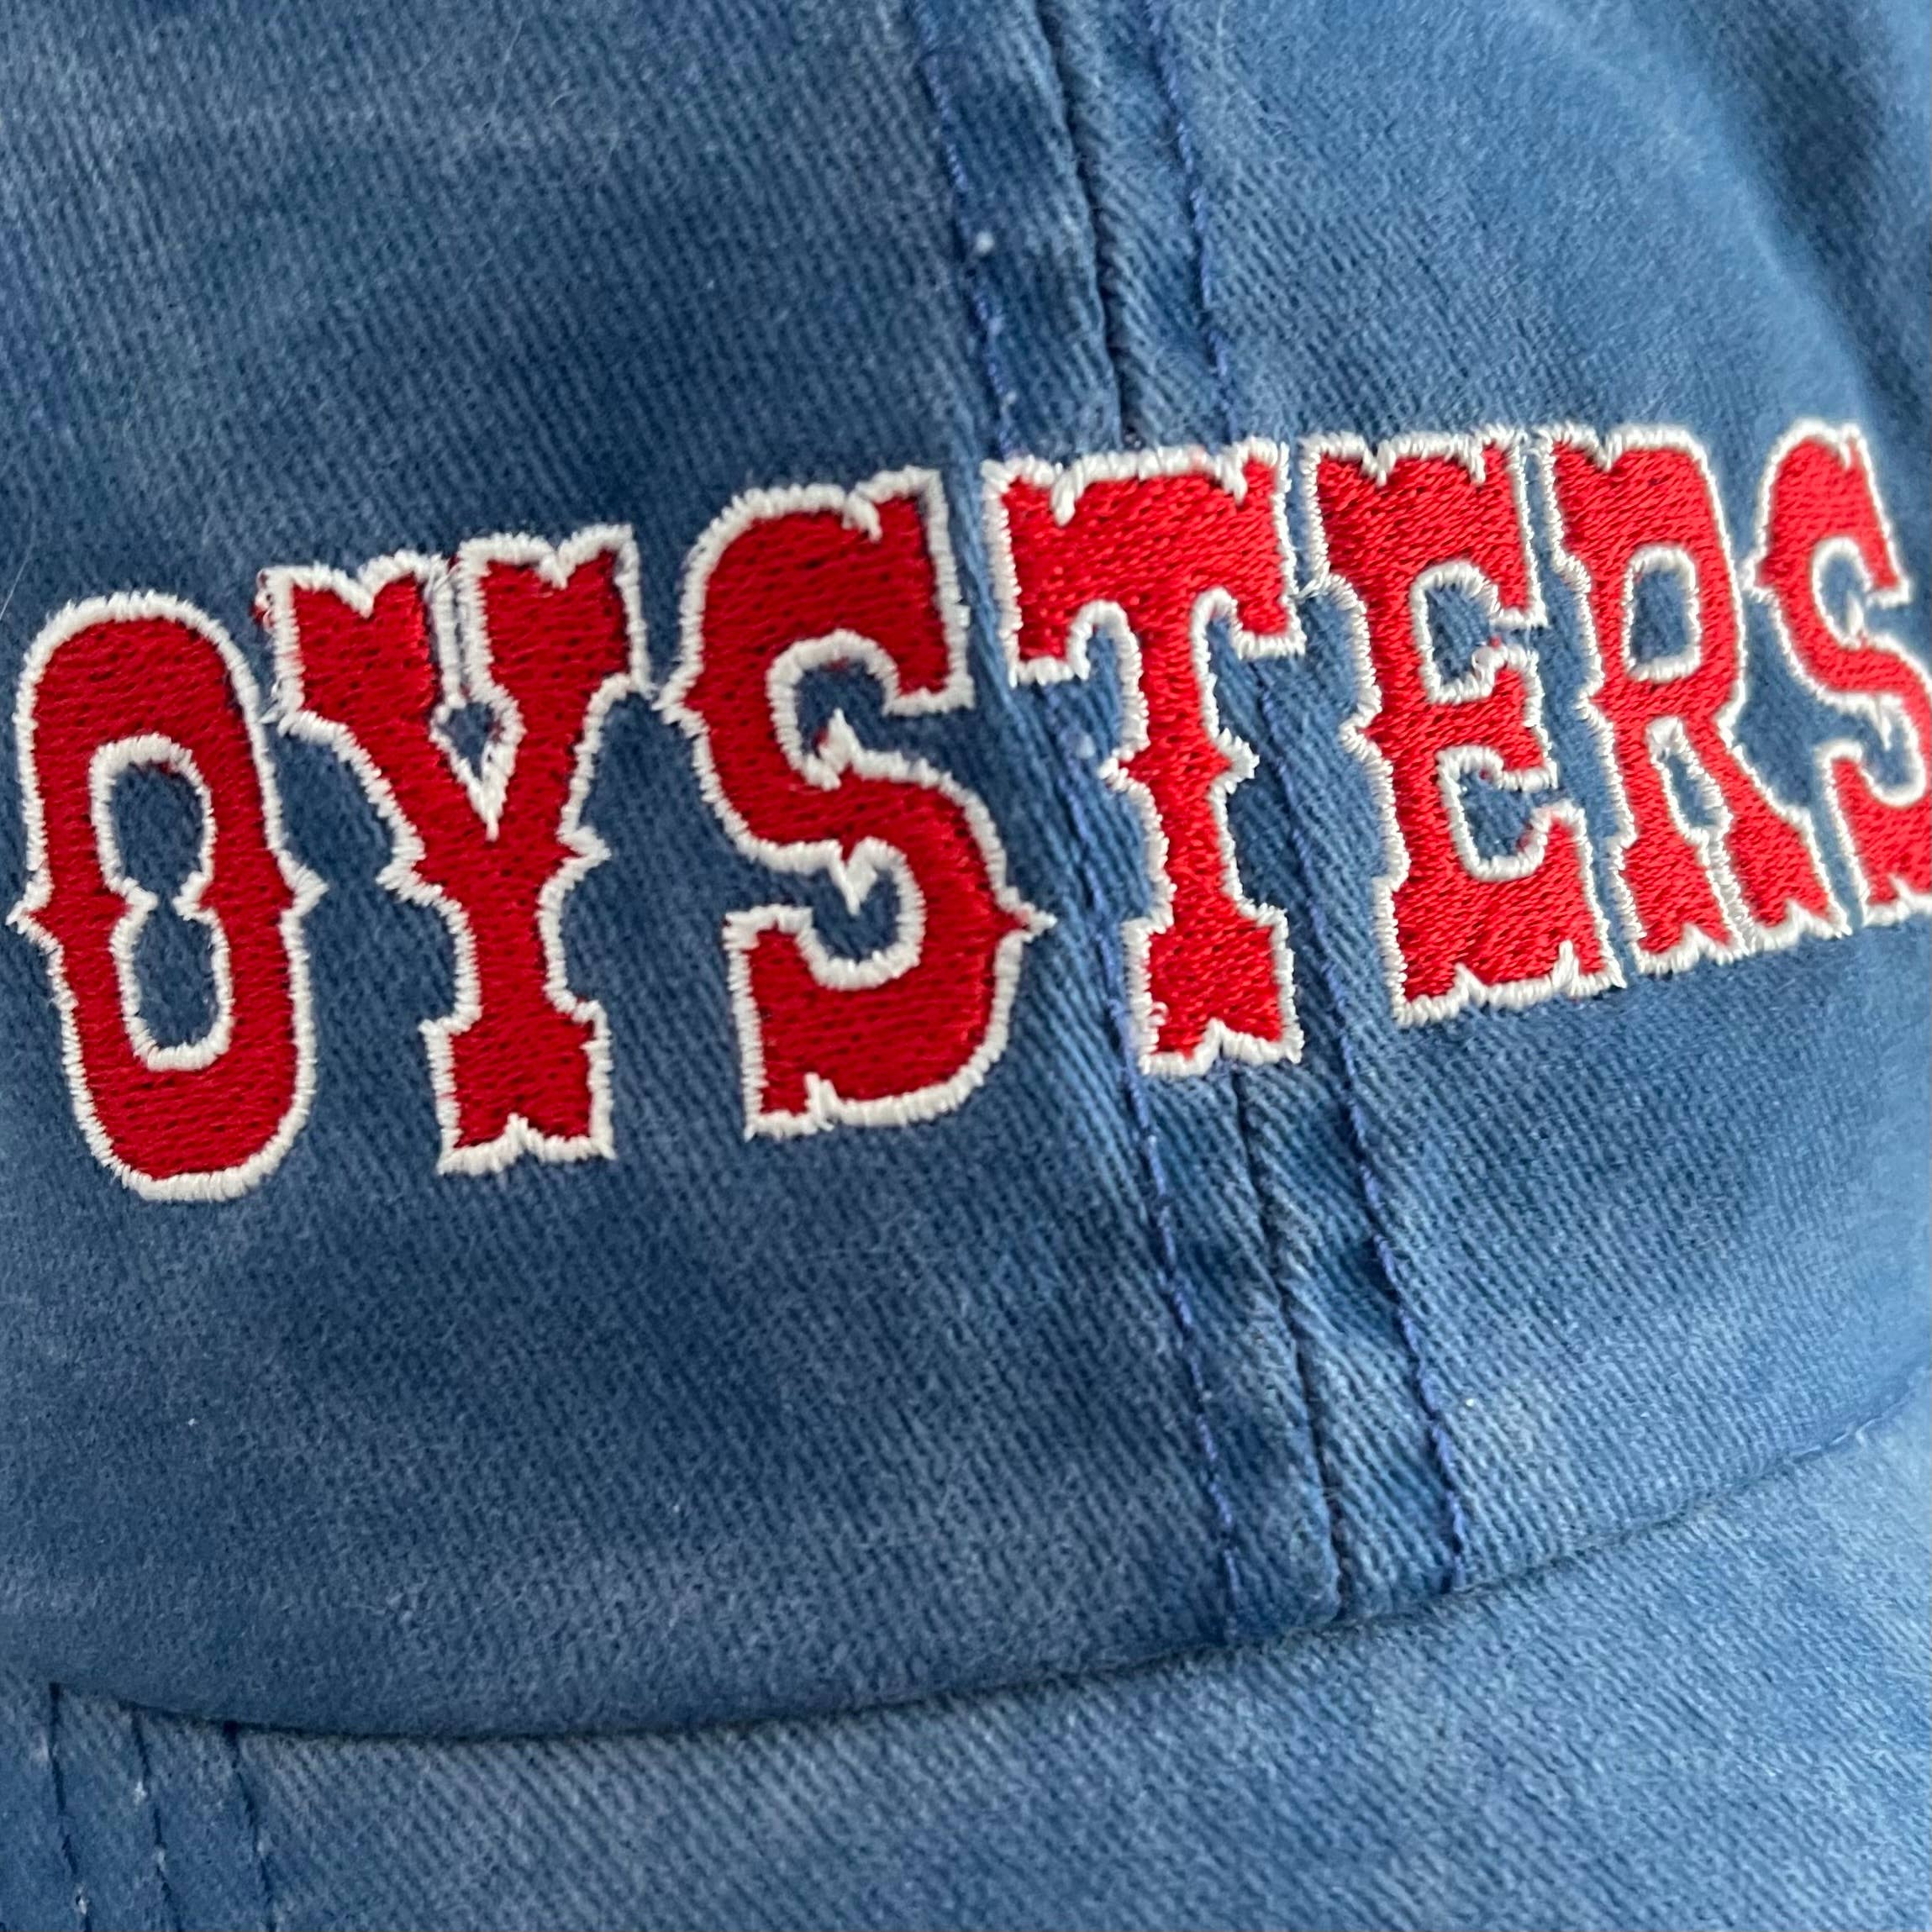 Oysters Baseball Cap